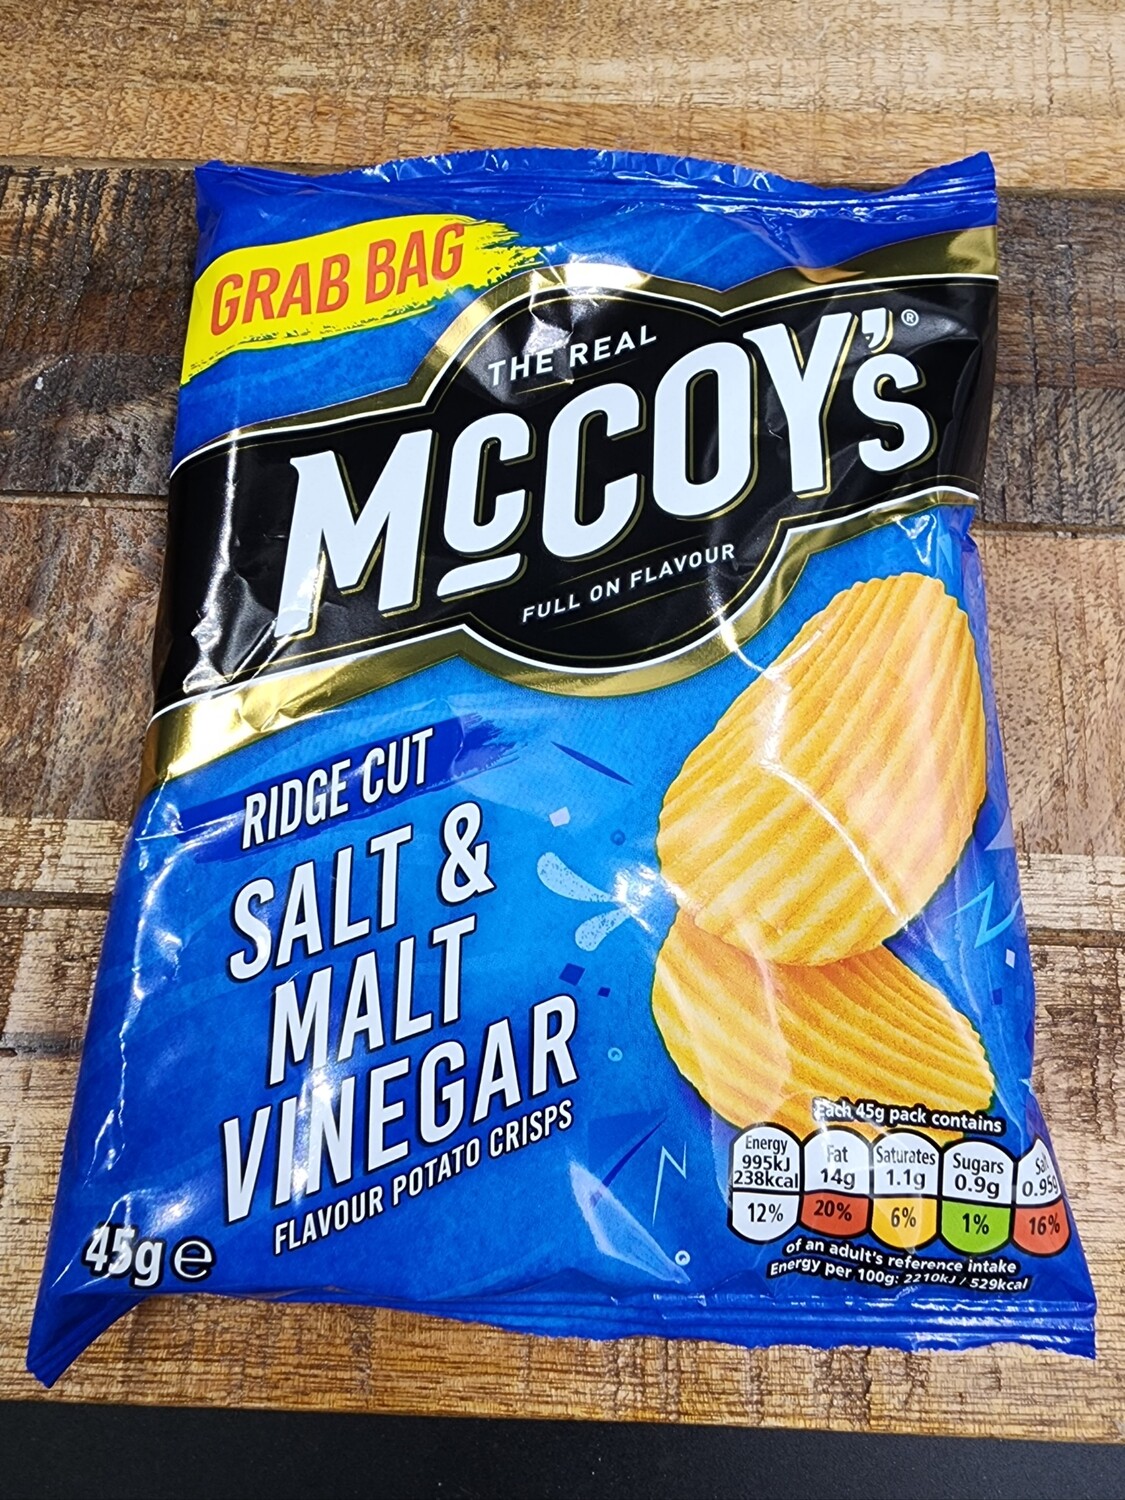 Mccoys Ridge Cut Salt & Malt Vinegar